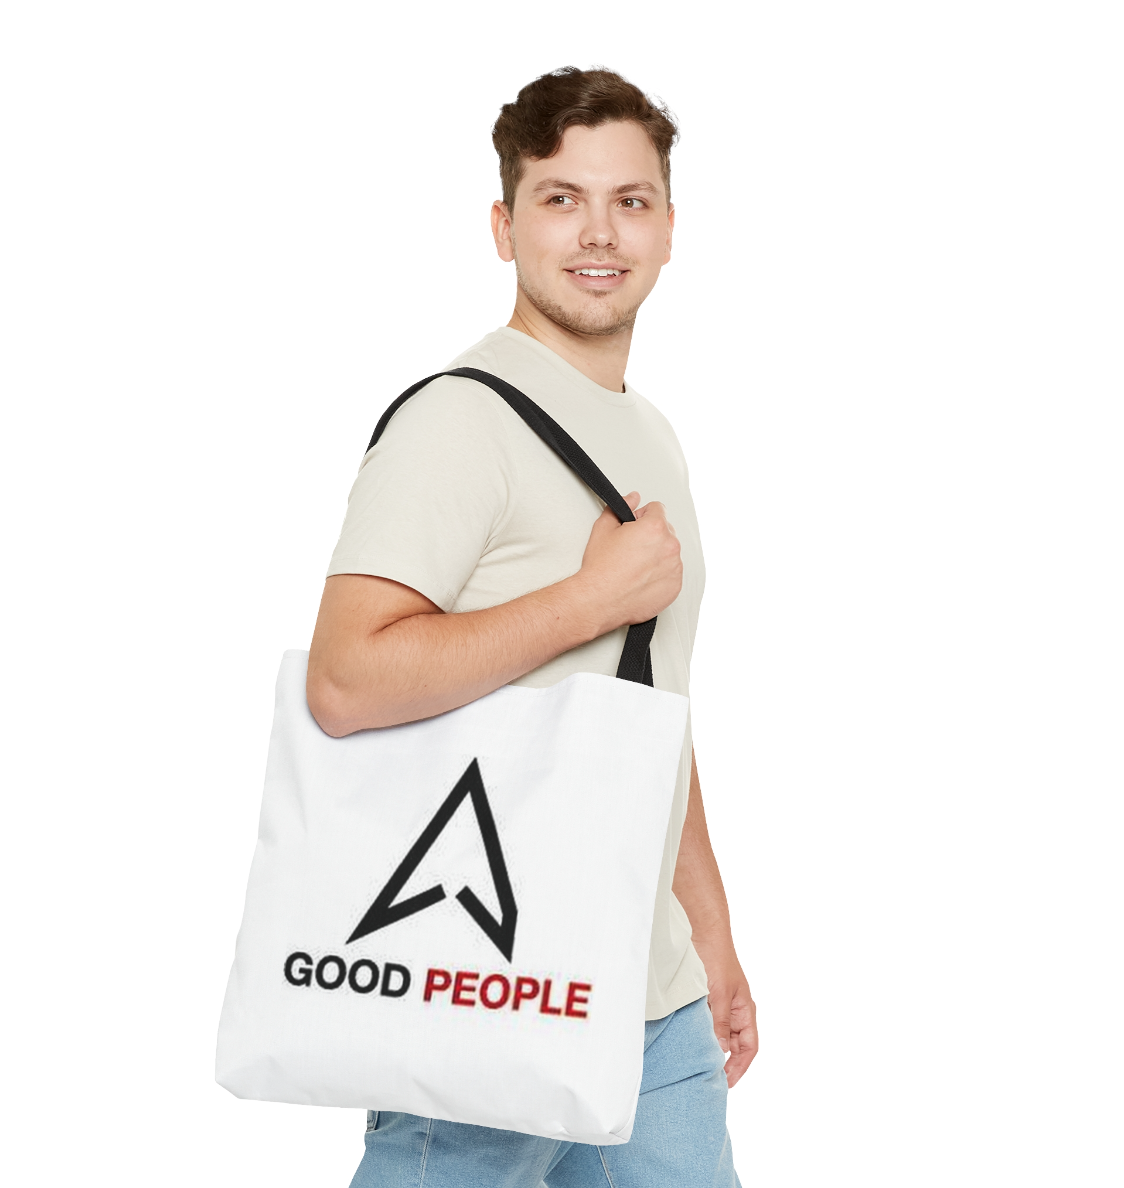 GoodPeople Triple Compartment Shoulder Bag.